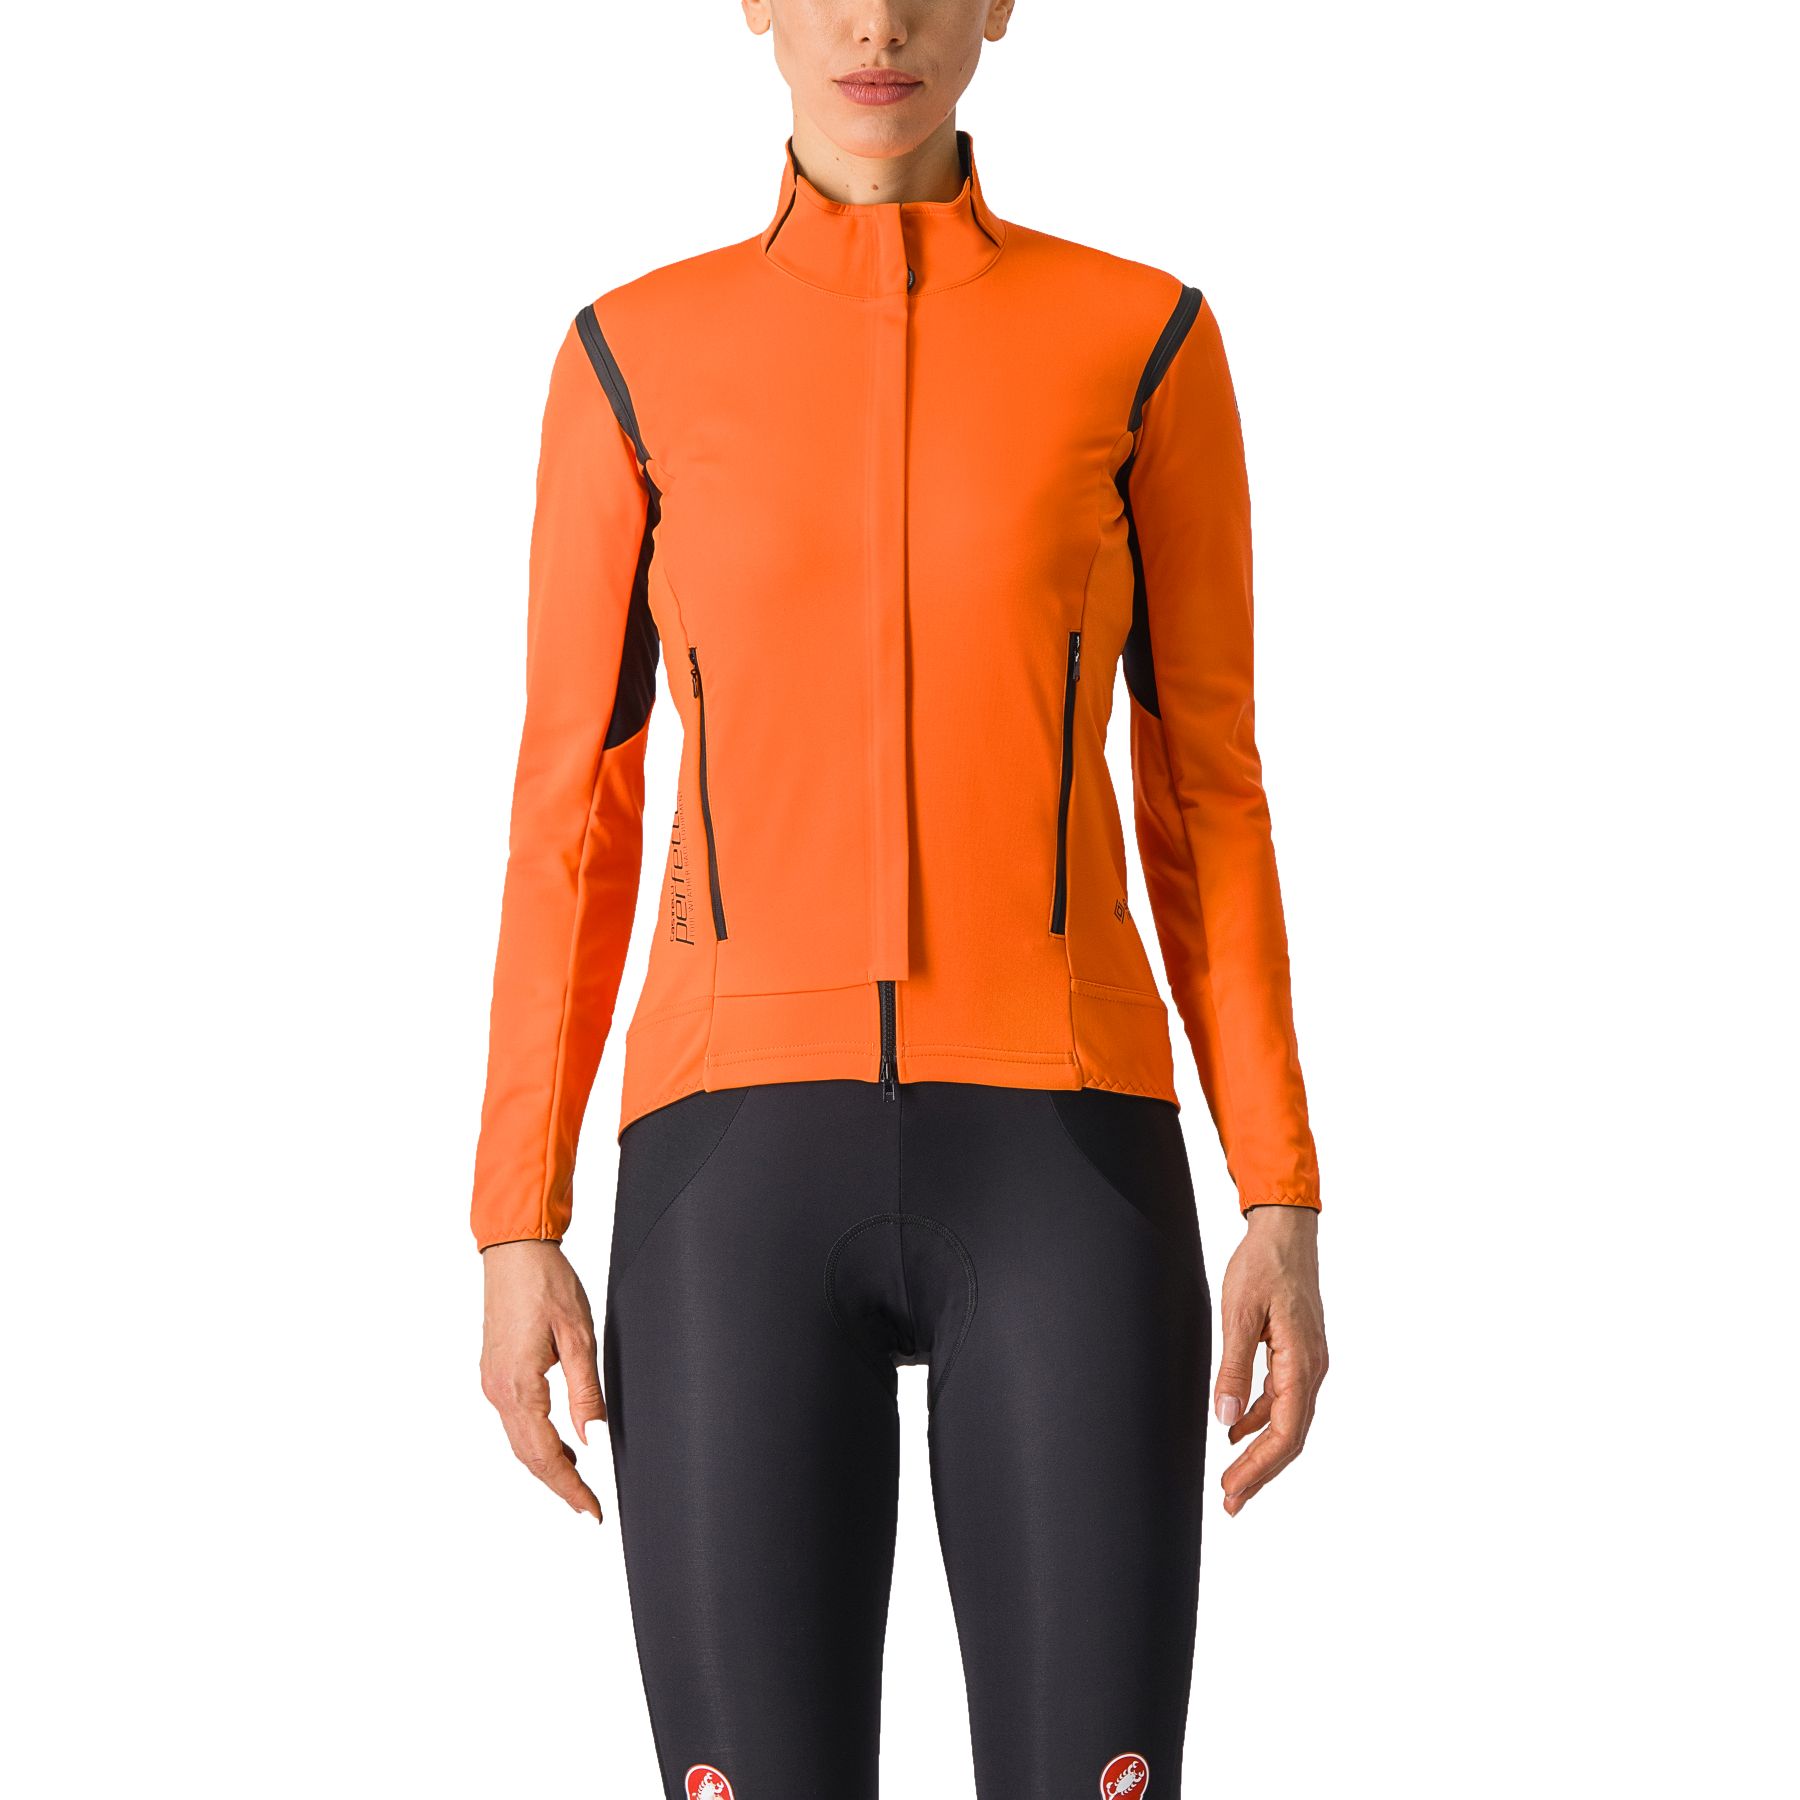 Picture of Castelli Perfetto RoS 2 Jacket Women - red orange/black 857